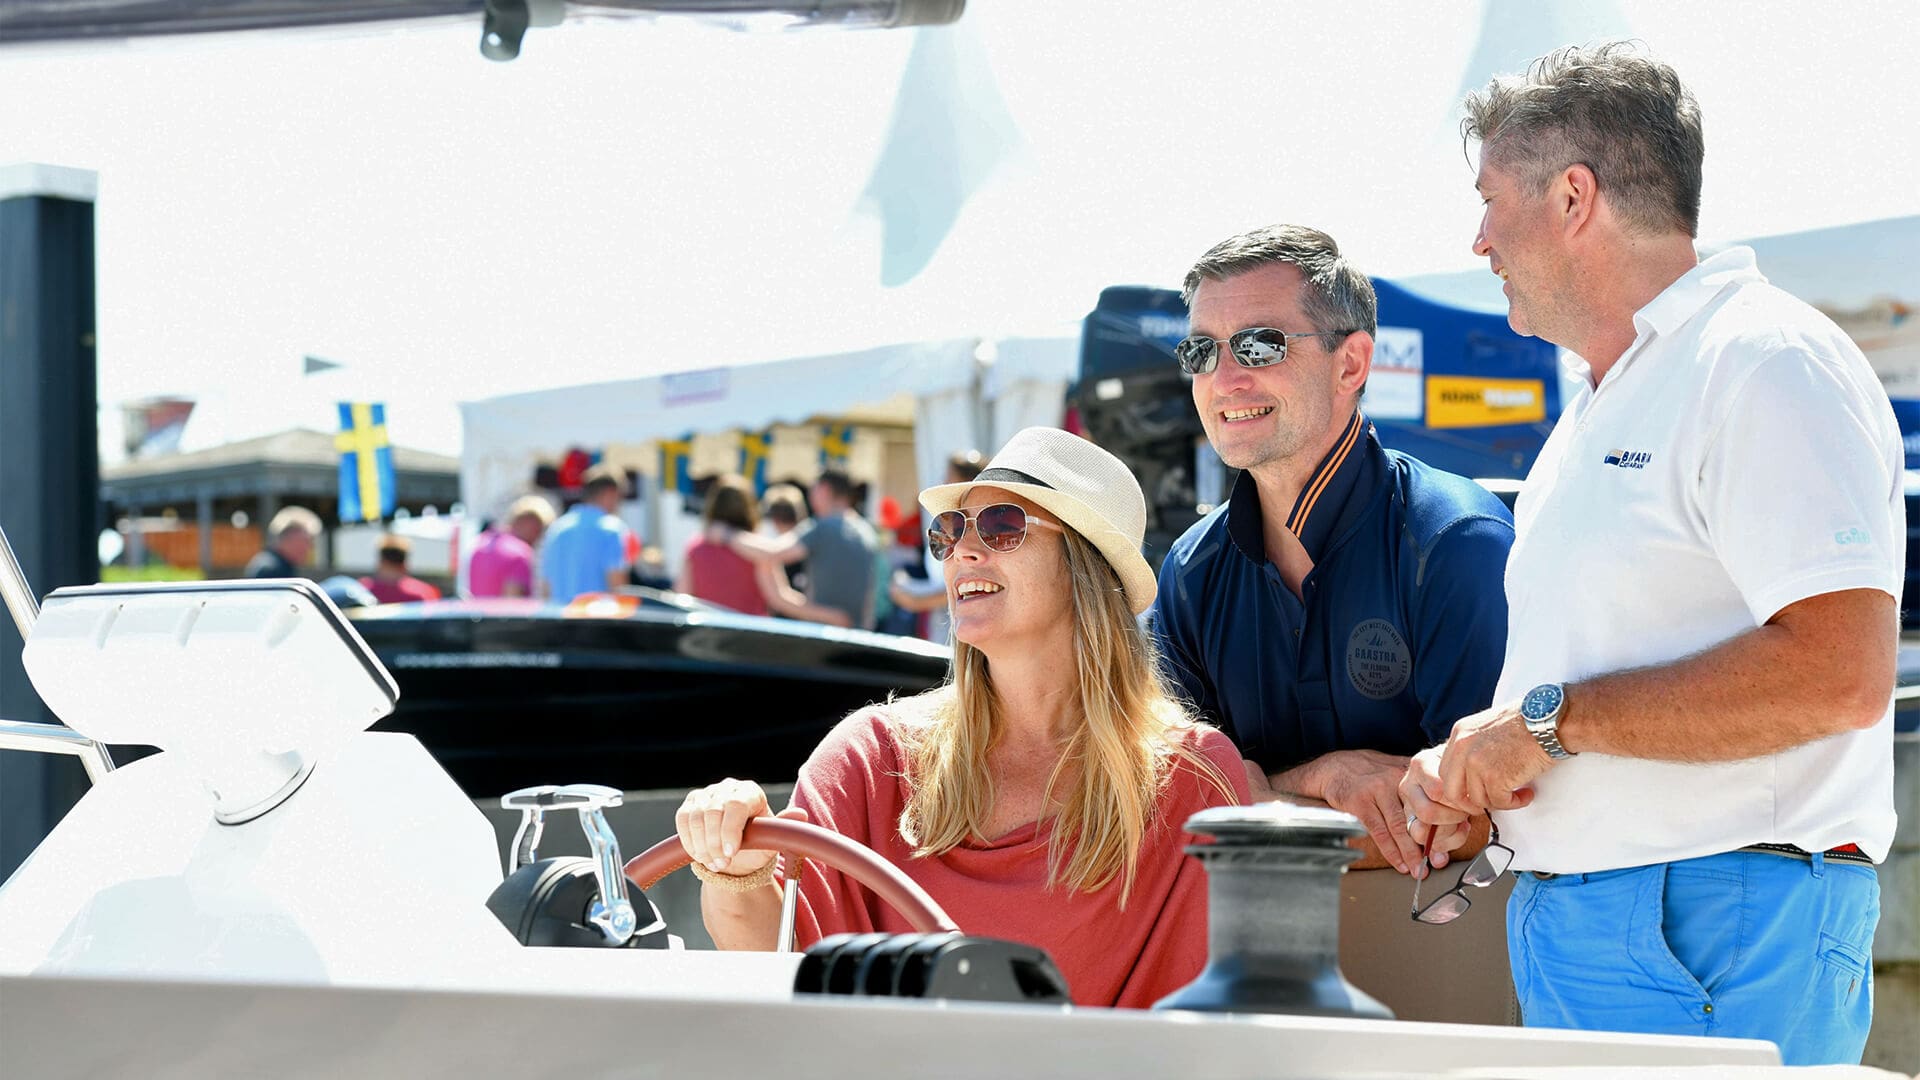 verslag-ancora-yachtfestival:-17.023-bezoekers